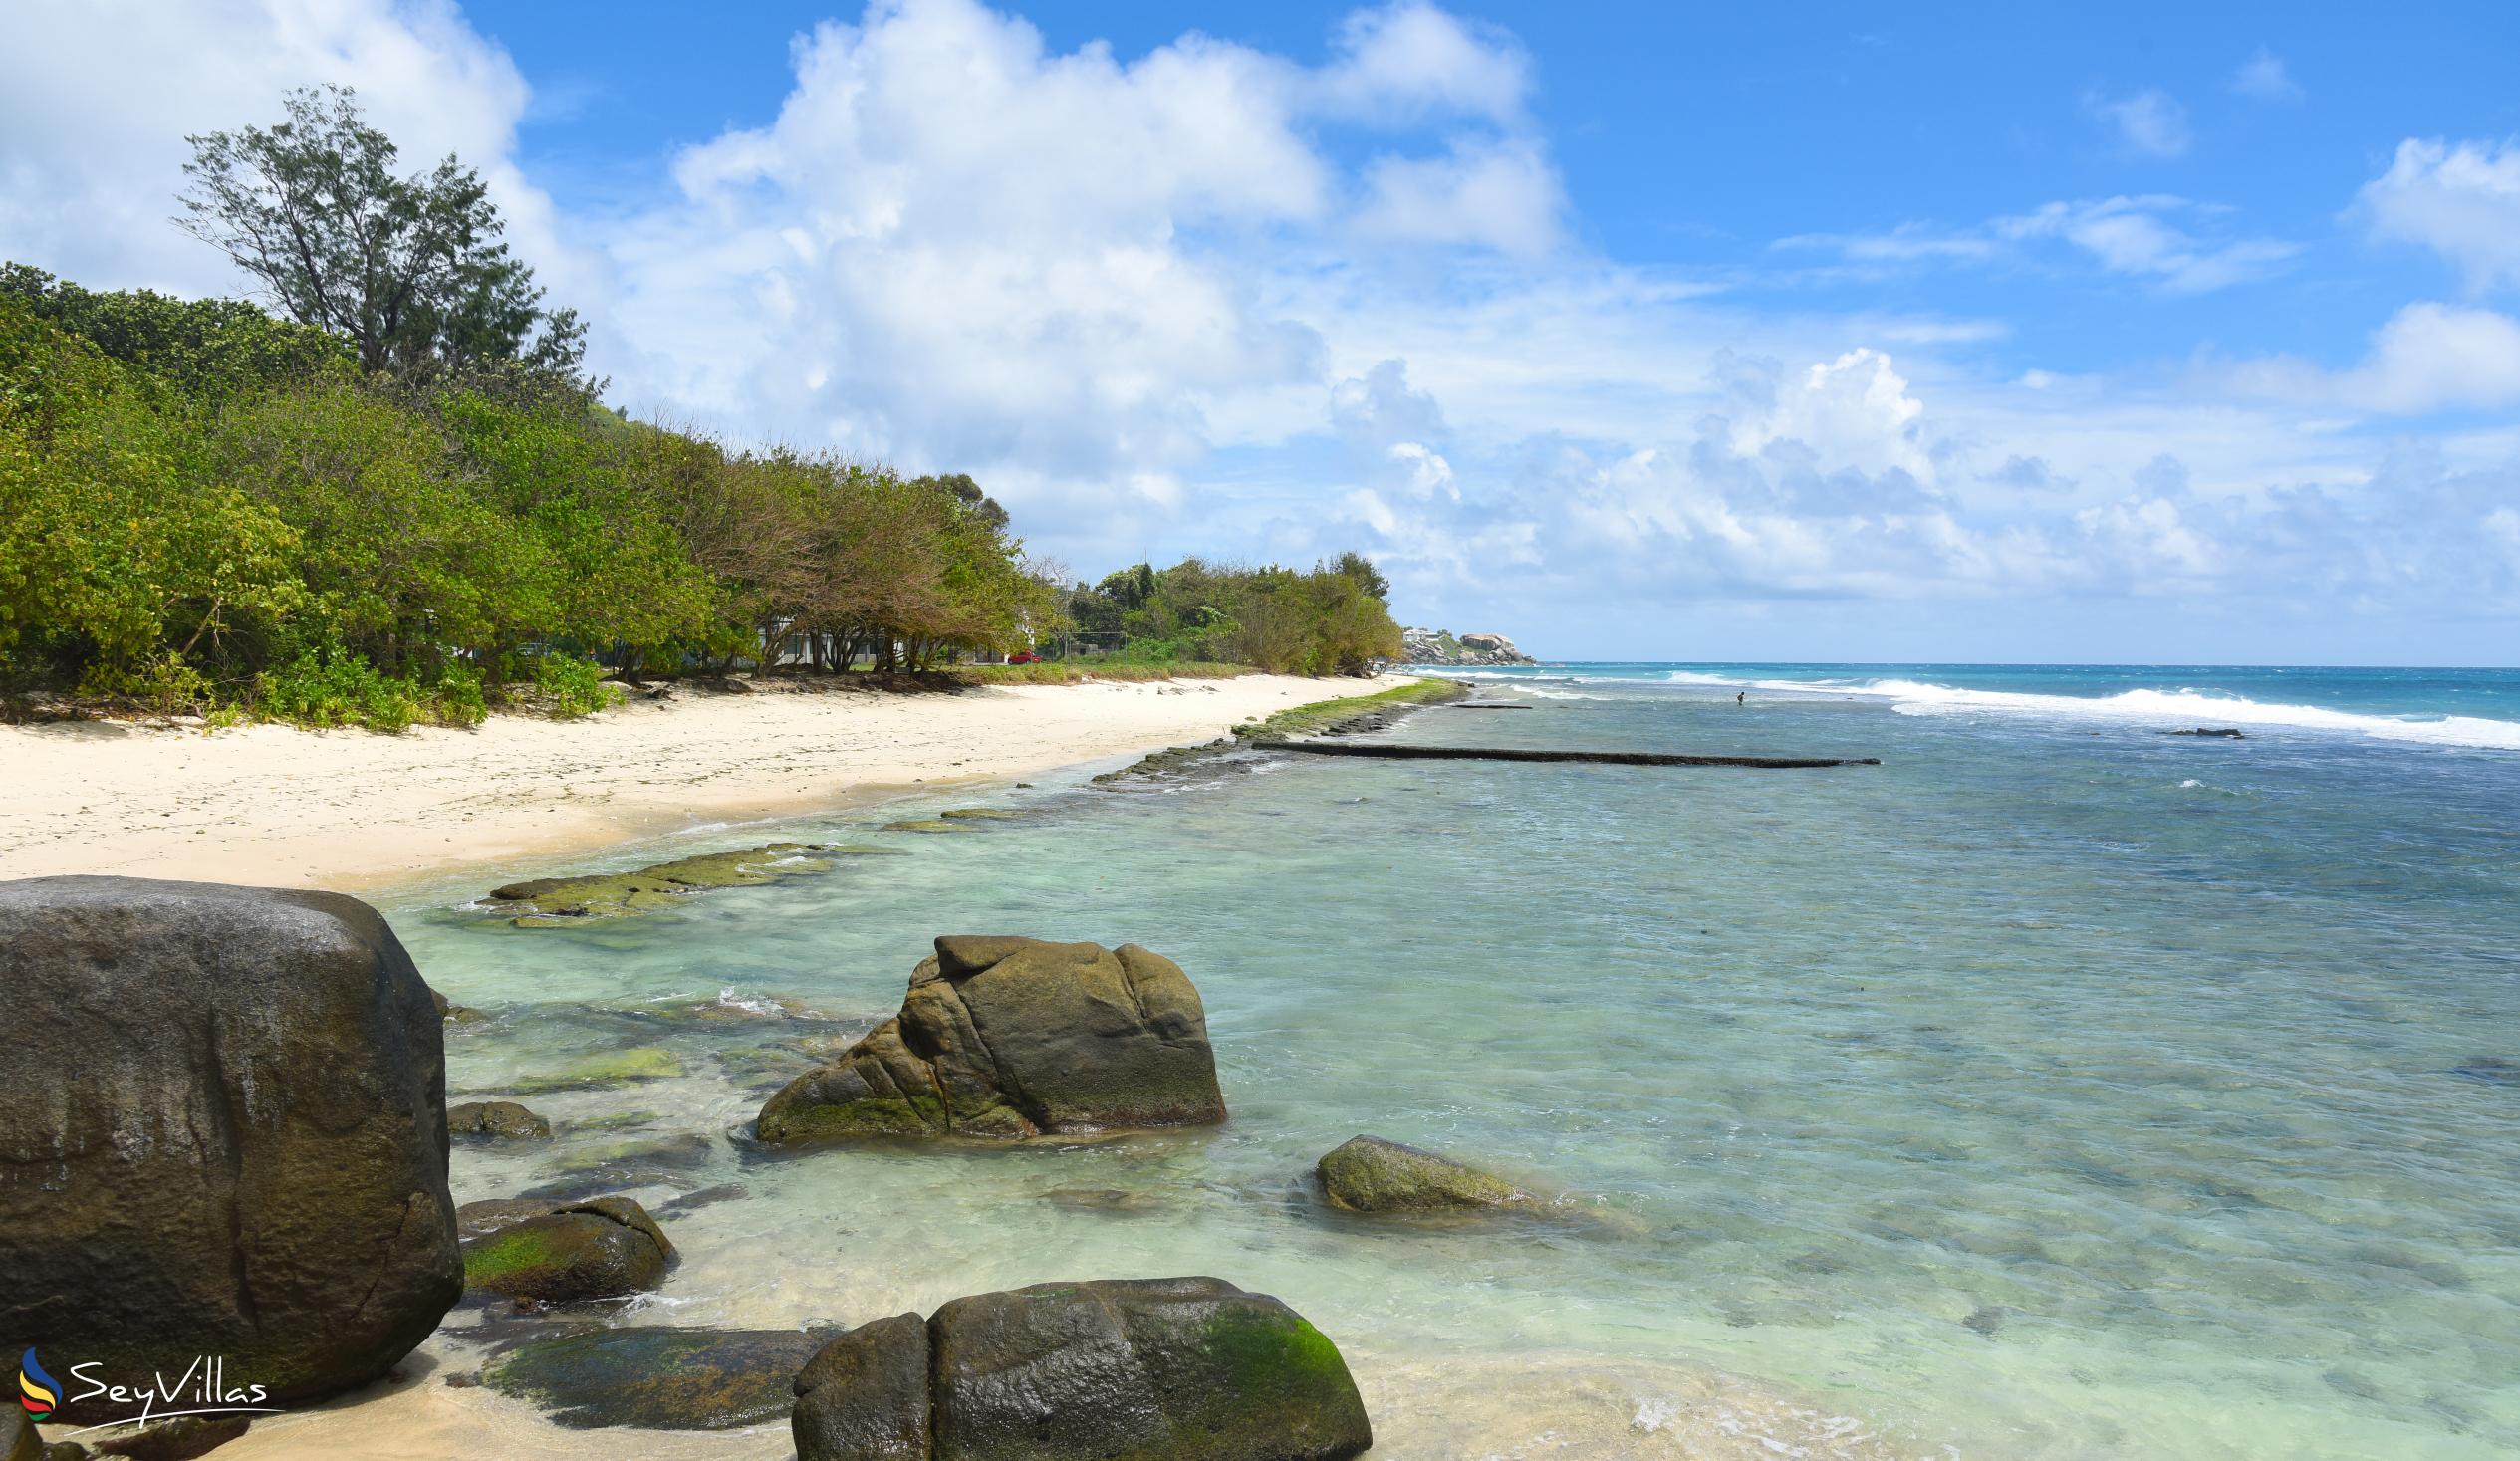 Photo 1: Anse Nord d'Est - Mahé (Seychelles)